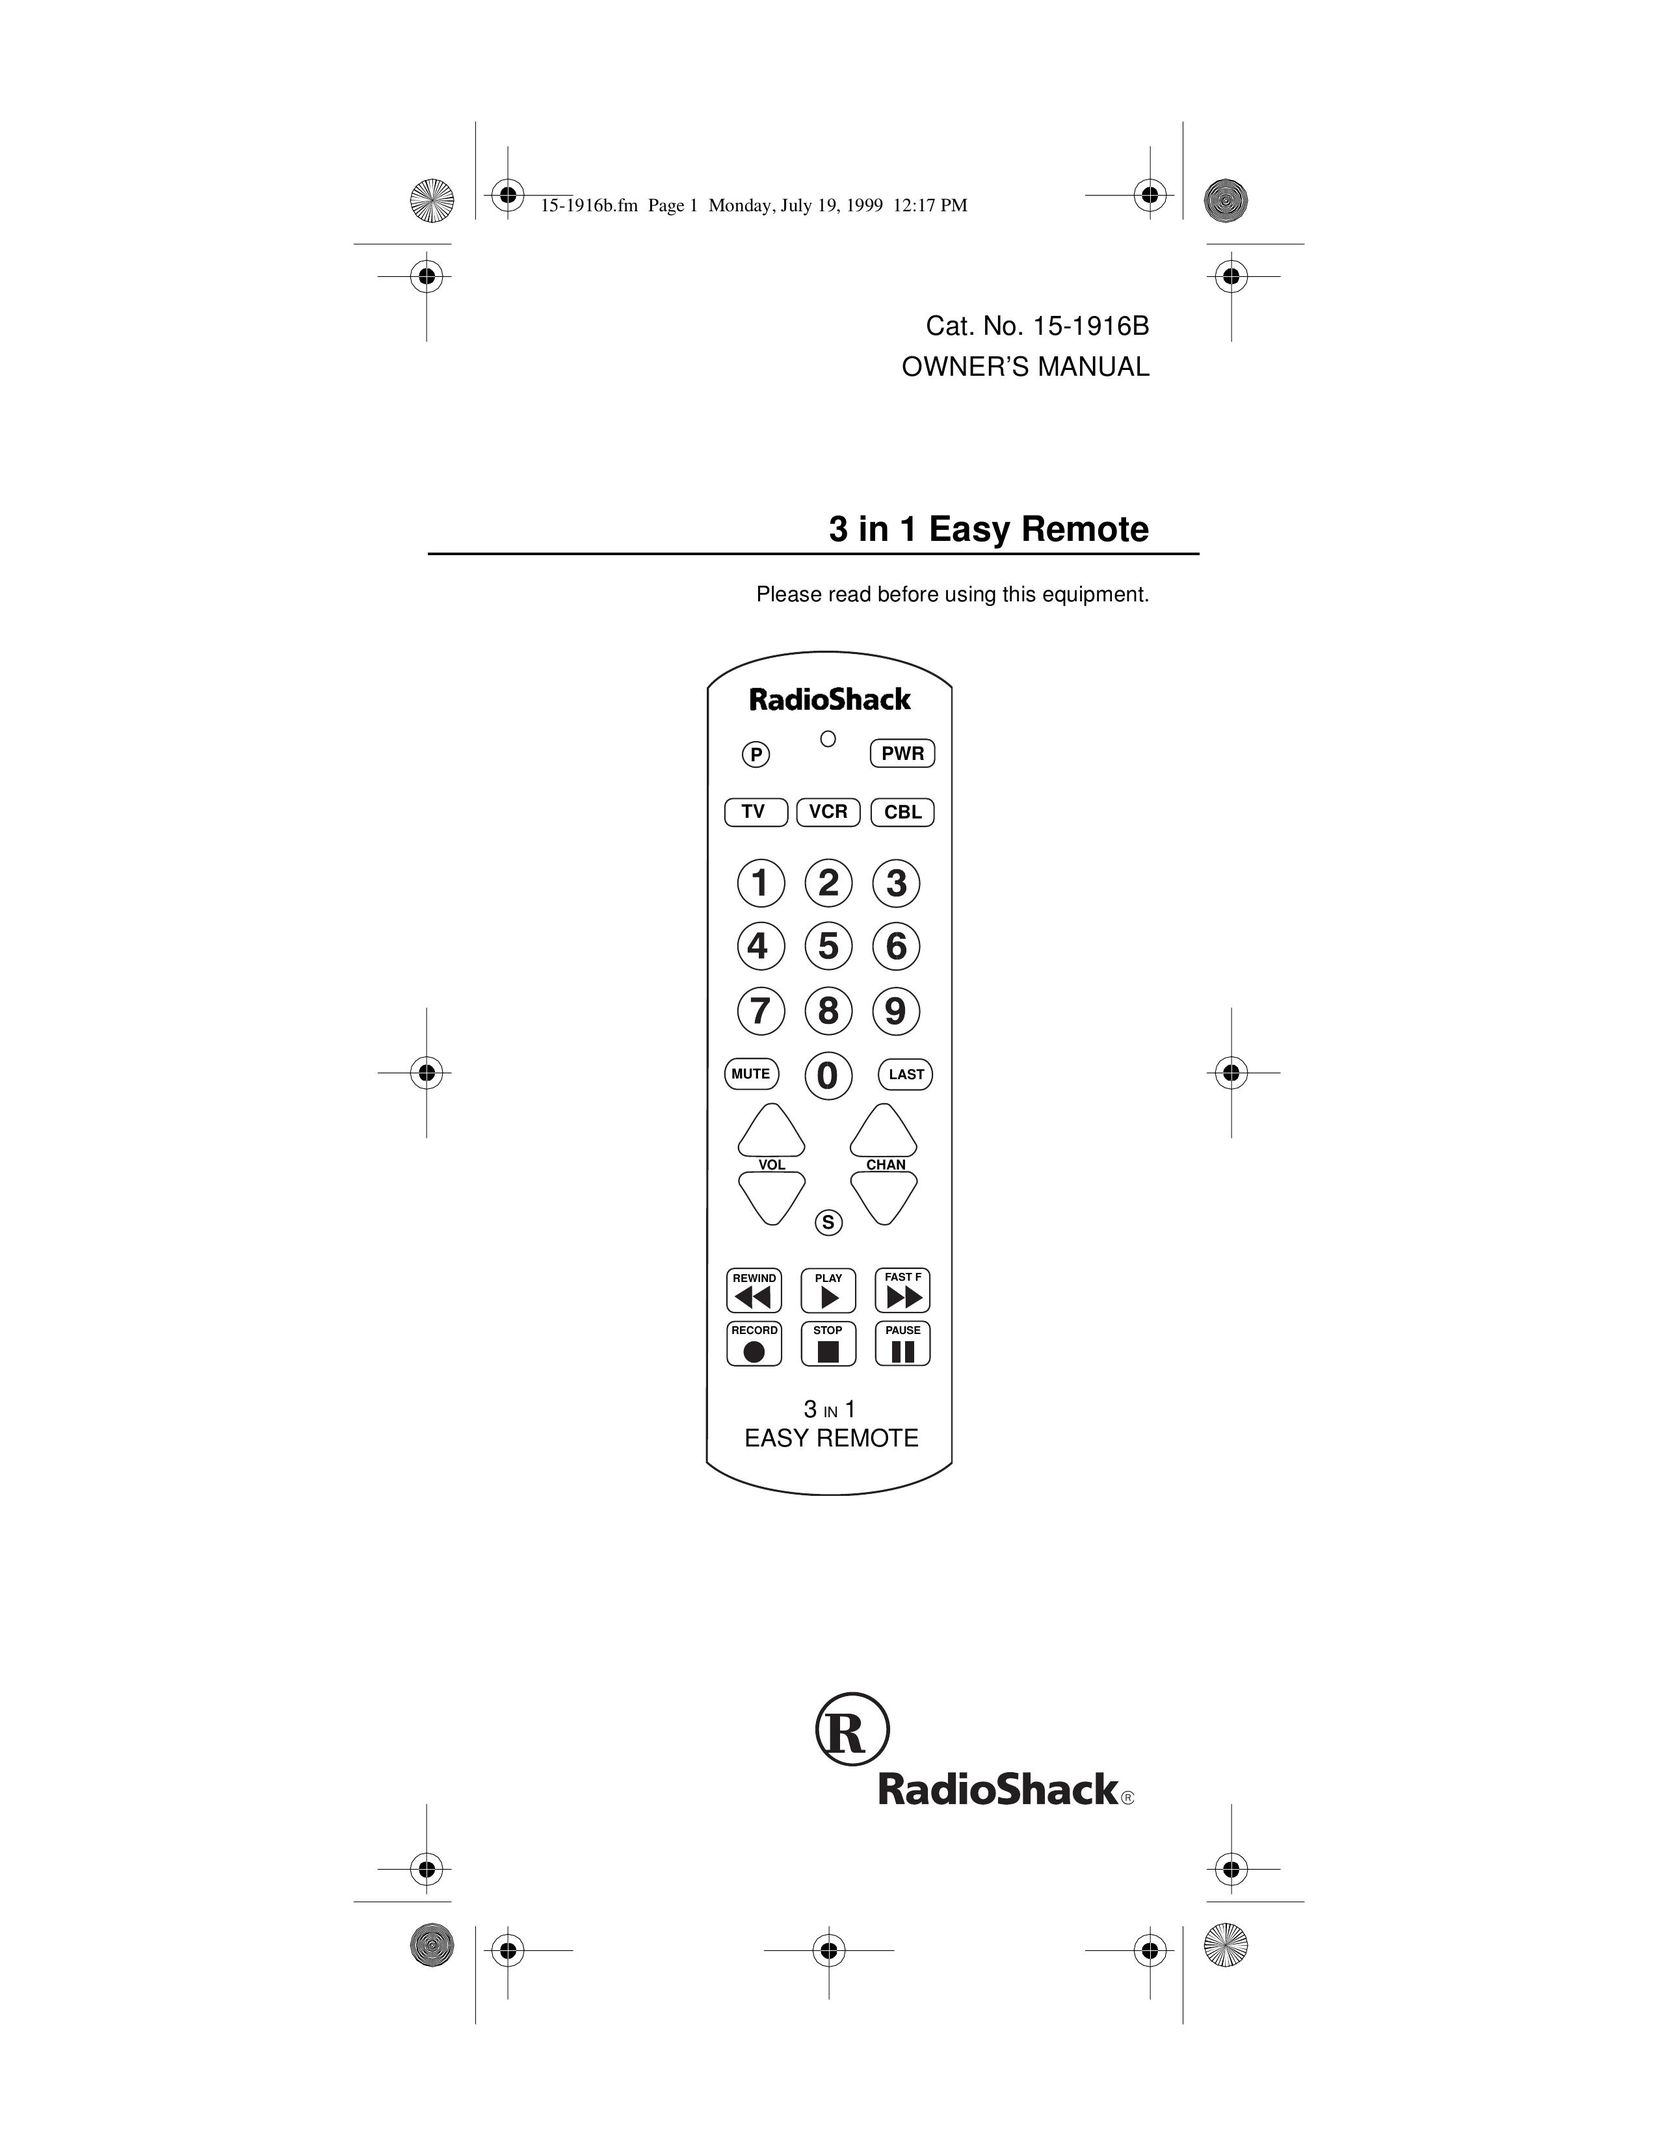 Radio Shack Easy Remote Universal Remote User Manual